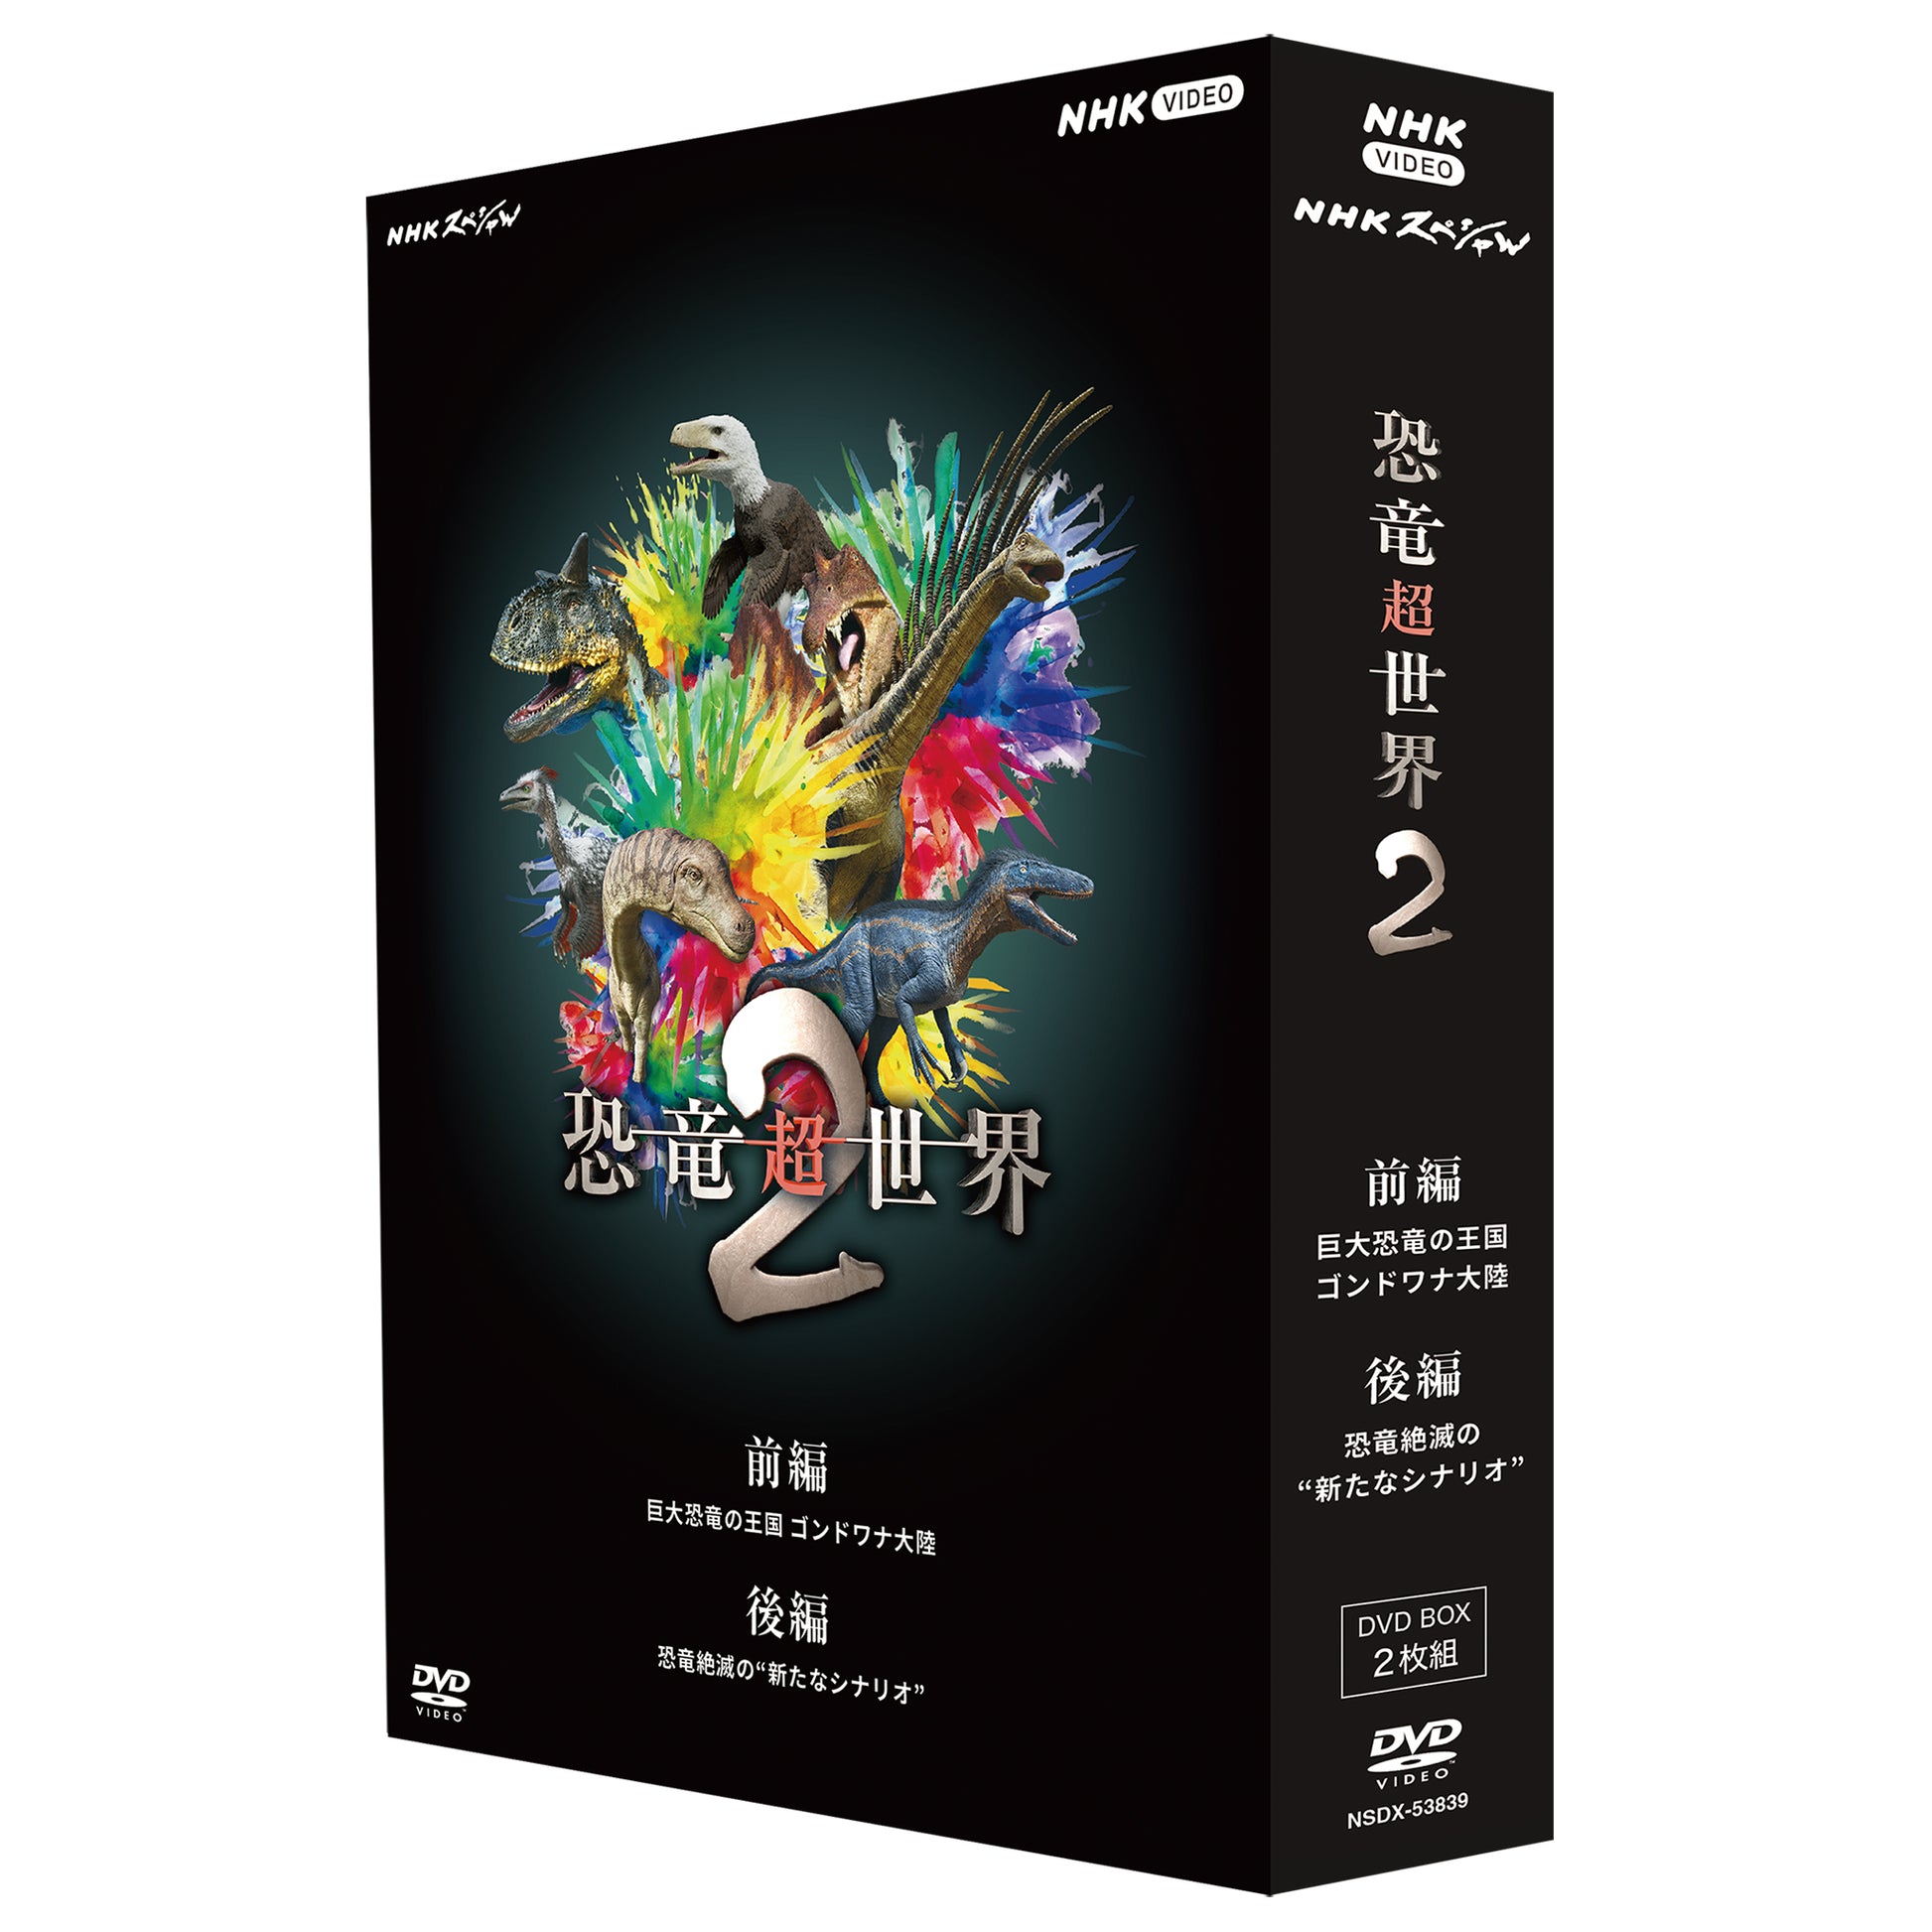 NHKスペシャル 恐竜超世界 in Japan DVD - ドキュメンタリー